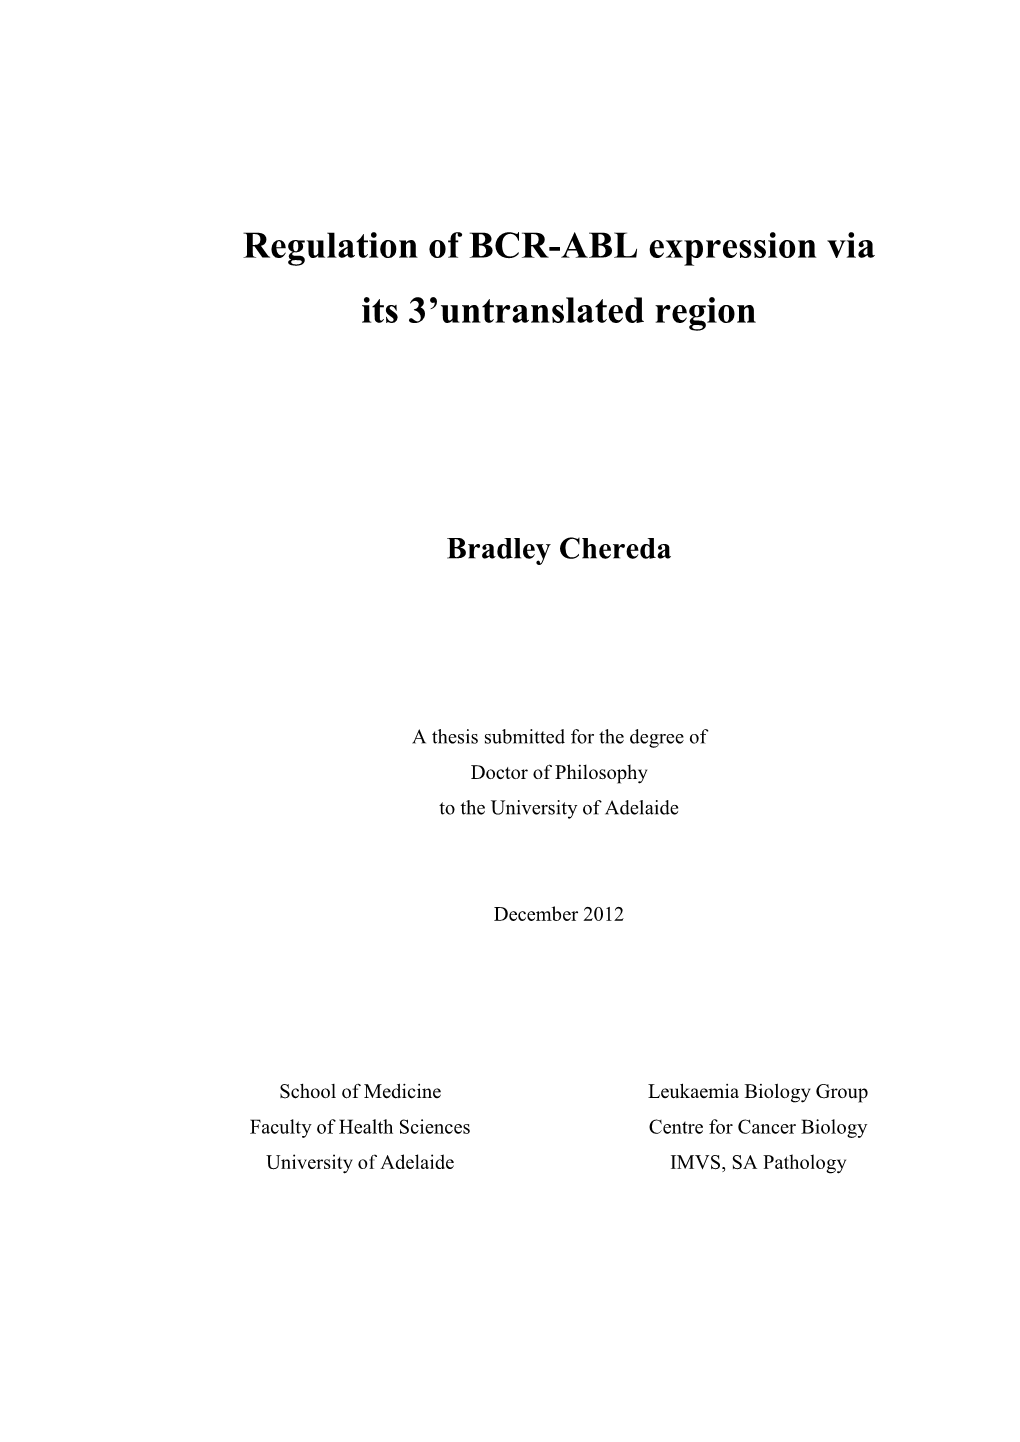 Regulation of BCR-ABL Expression Via Its 3' Untranslated Region